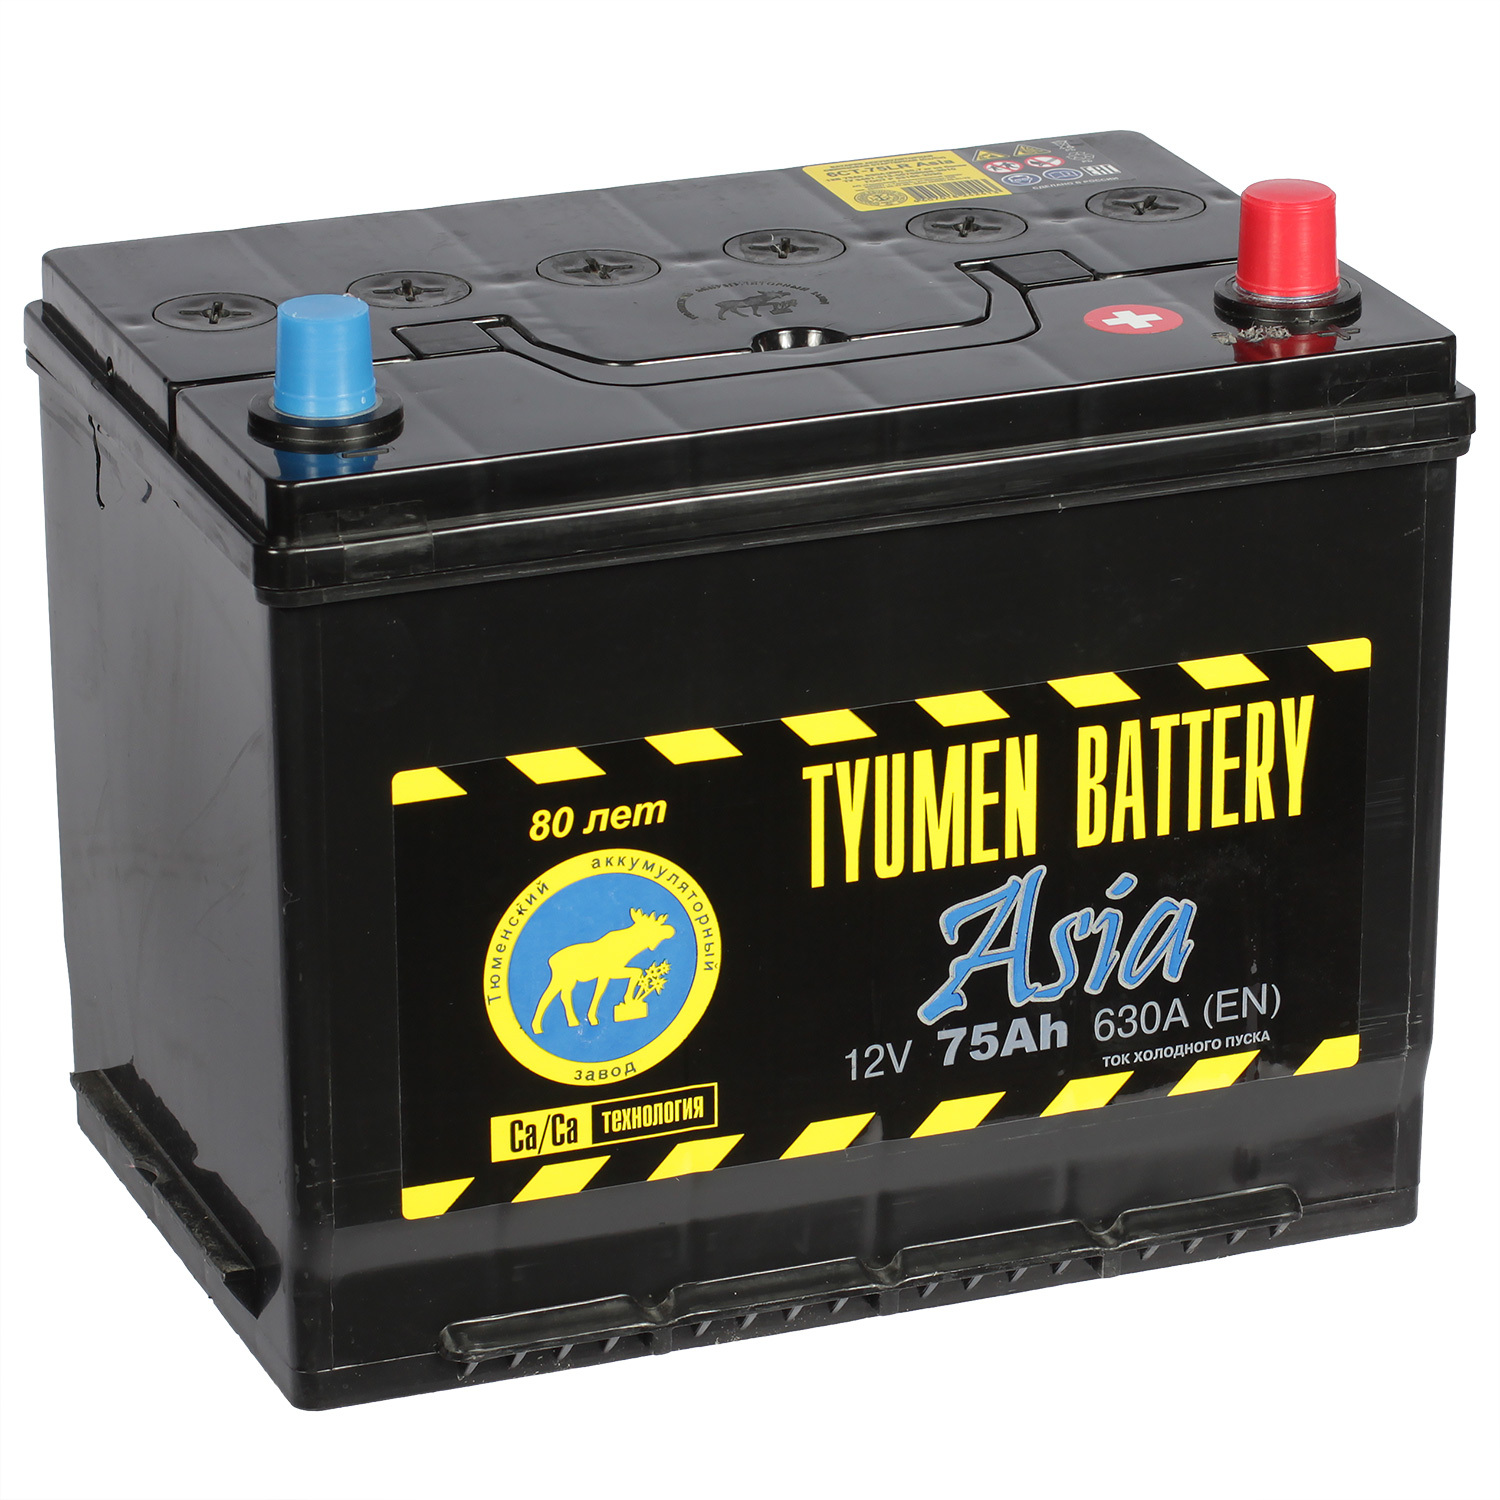 Tyumen Battery Автомобильный аккумулятор Tyumen Battery Asia 75 Ач обратная полярность D26L tyumen battery автомобильный аккумулятор tyumen battery asia 40 ач обратная полярность b19l